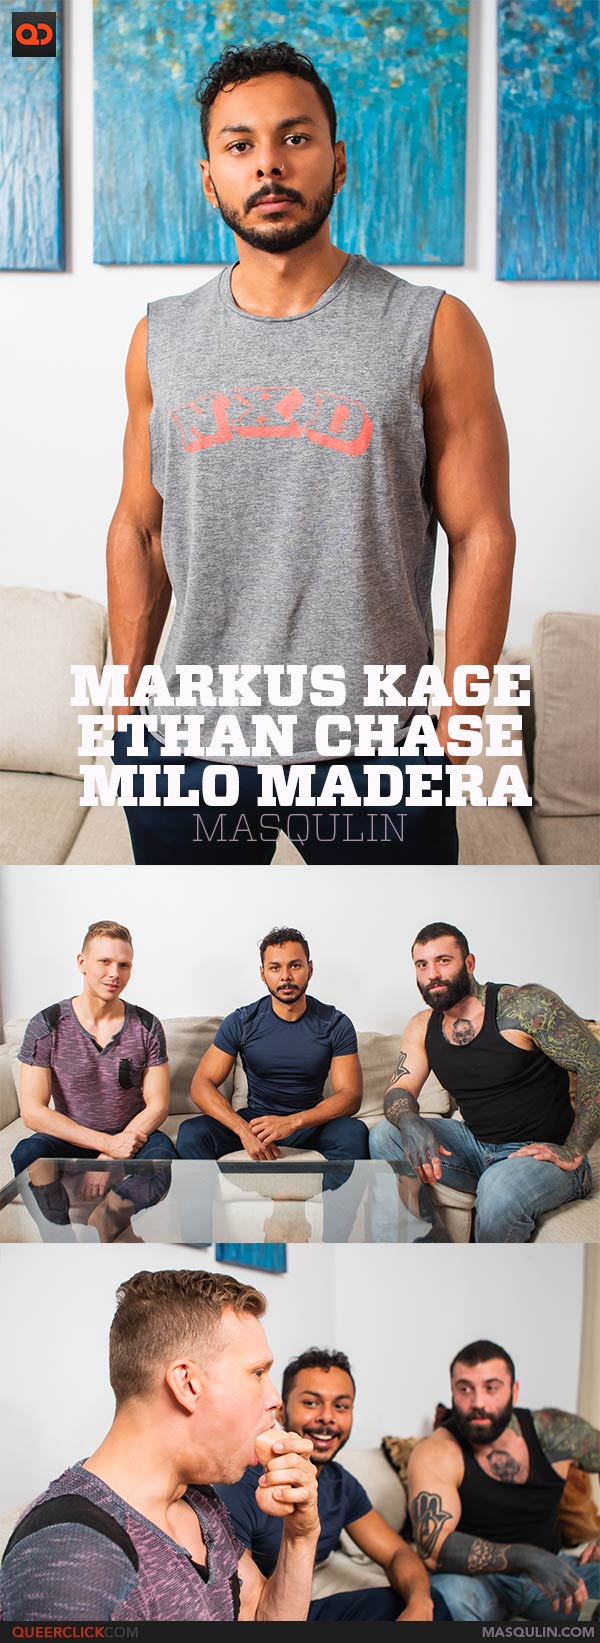 Masqulin: Markus Kage, Ethan Chase and Newcomer Milo Madera